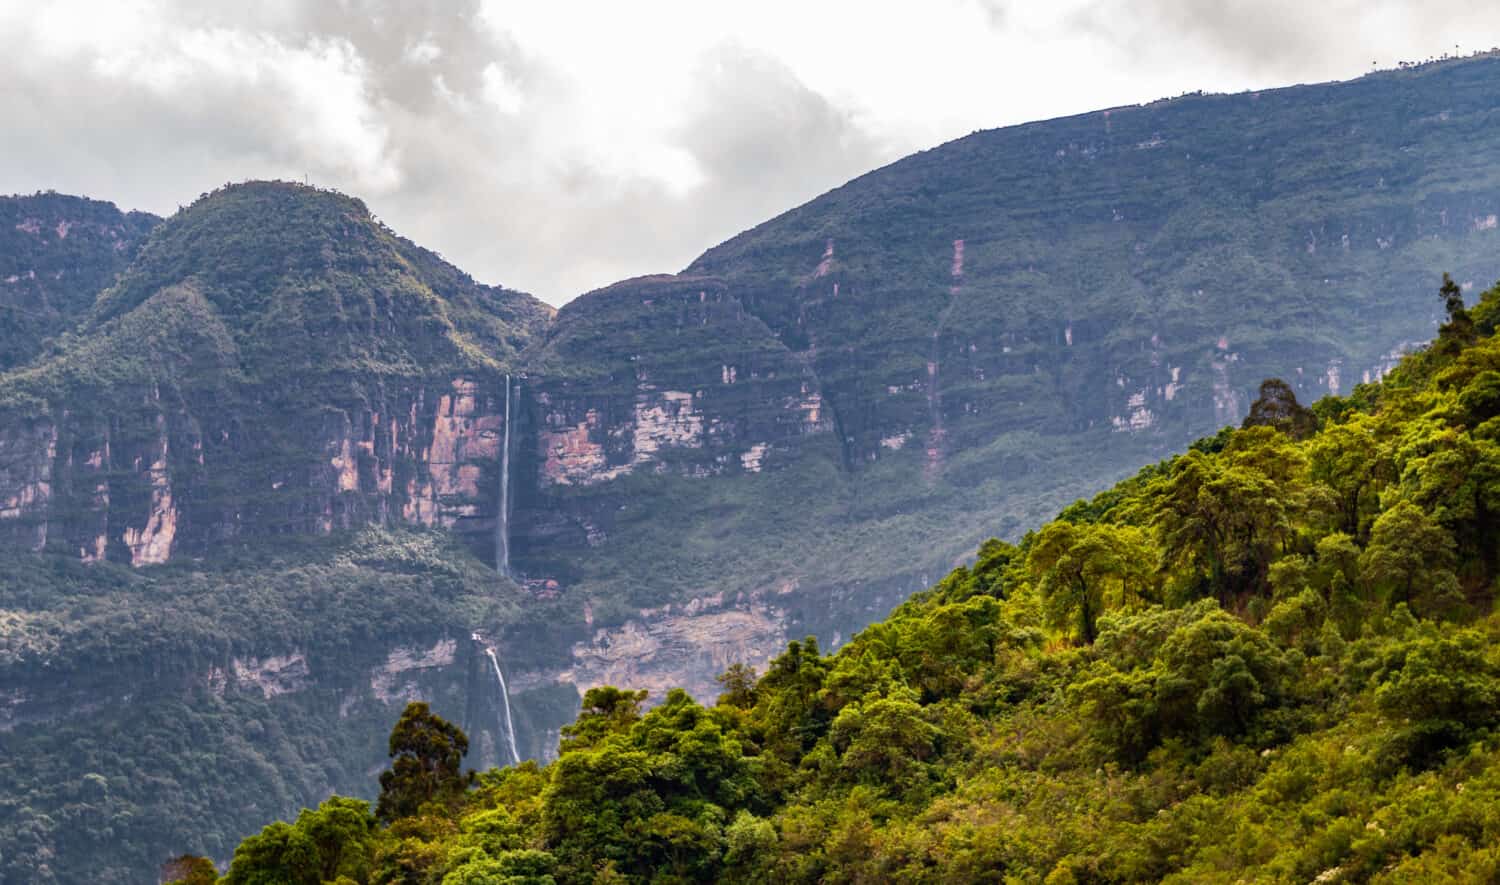 Gocta waterfall in the Chachapoyas region of northern Peru